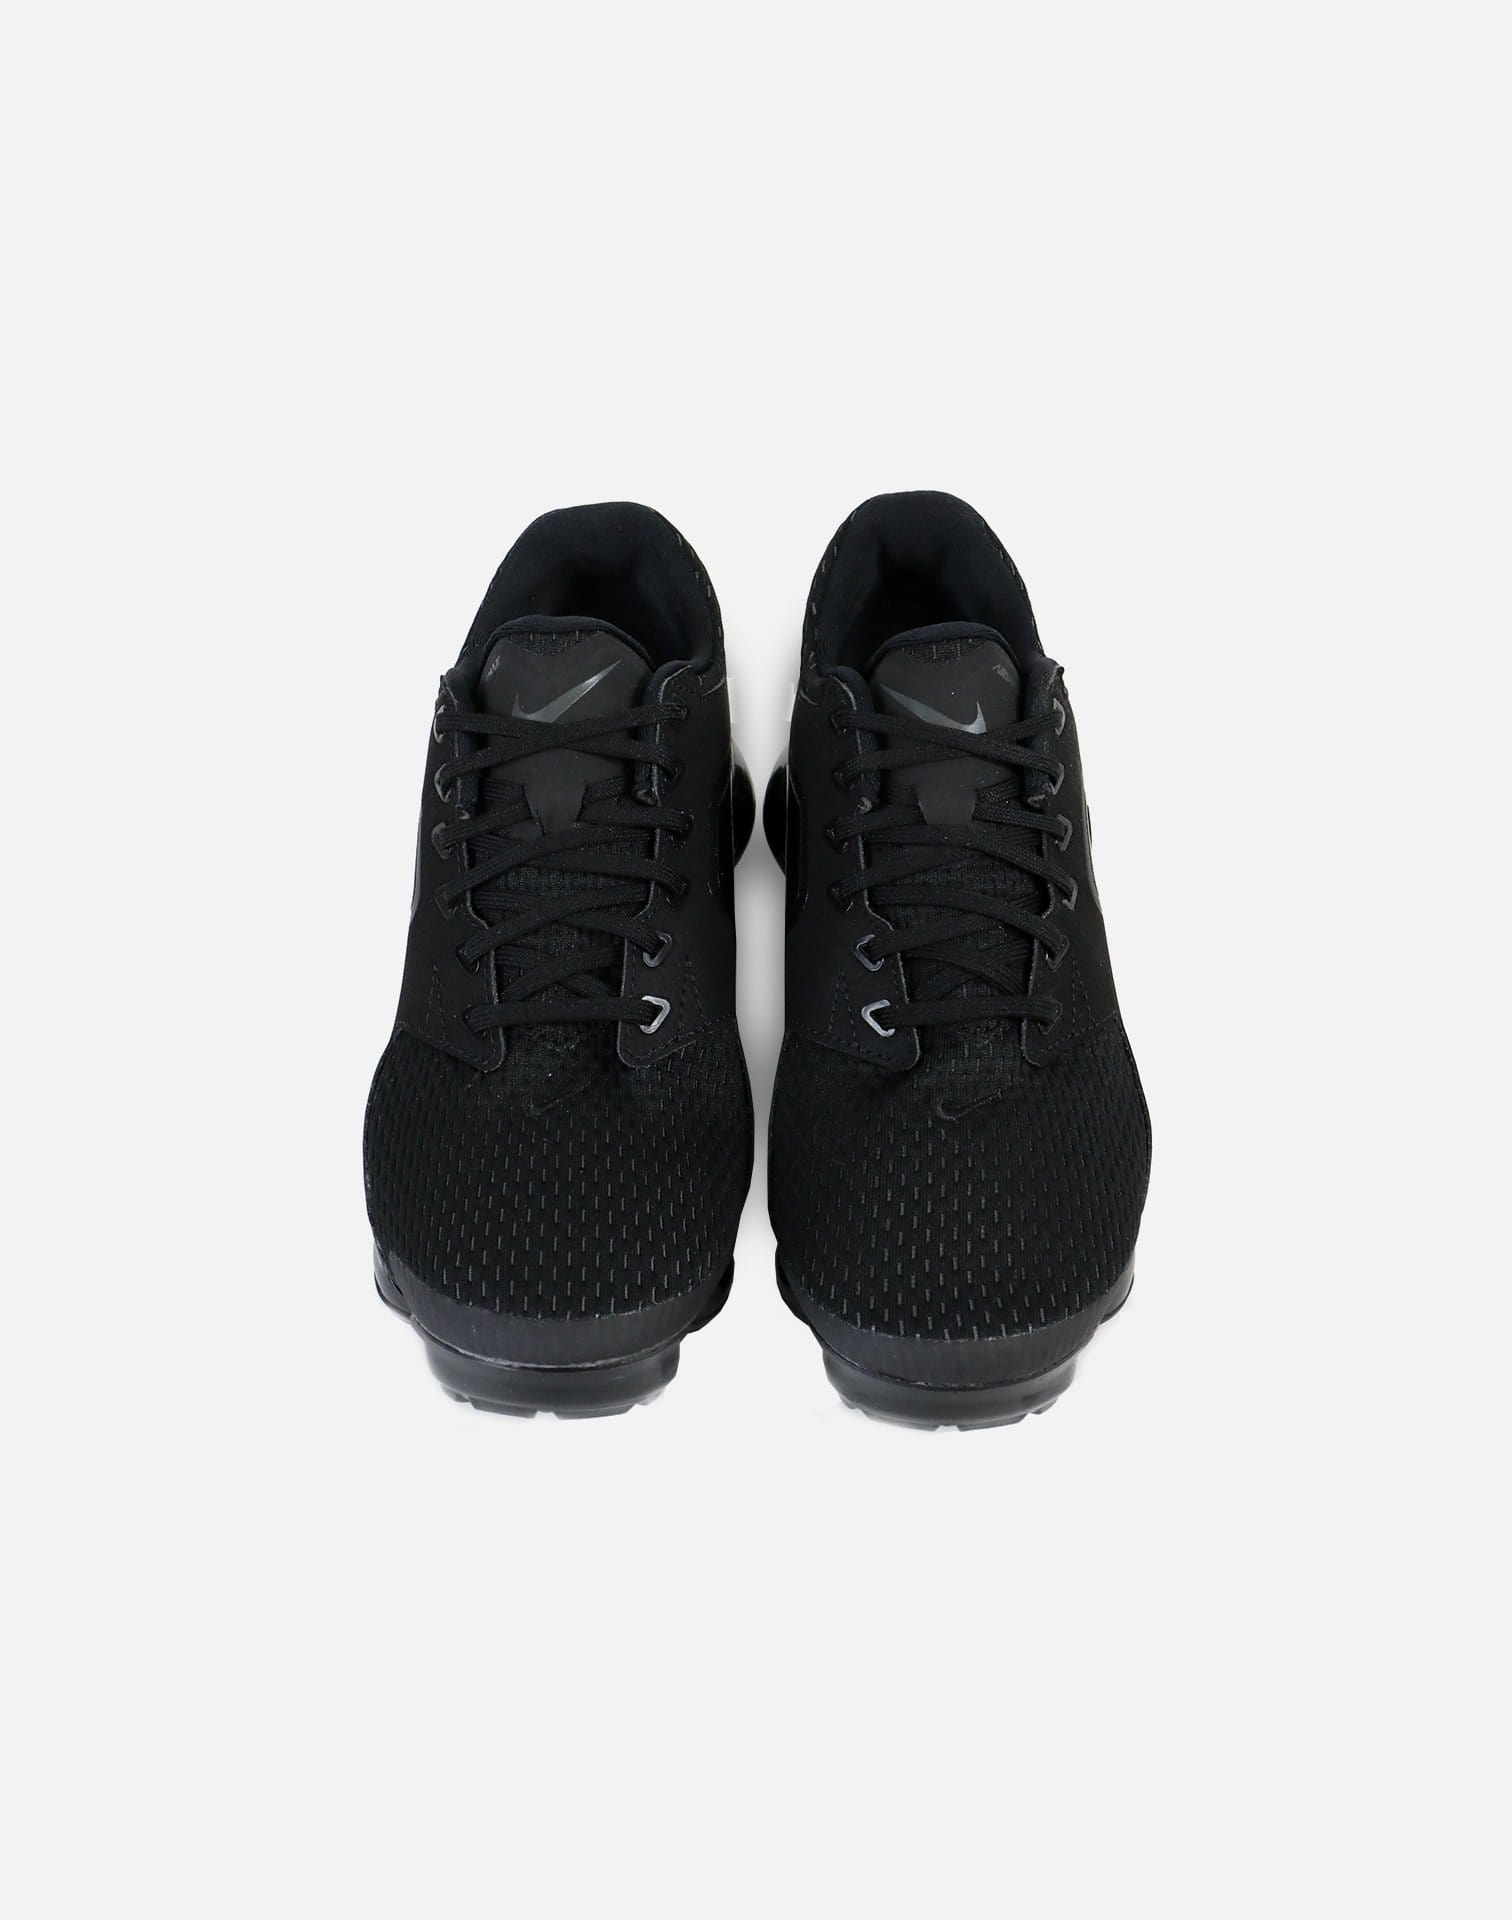 Nike Air VaporMax Plus Black Gold CW7299 001 Release Date